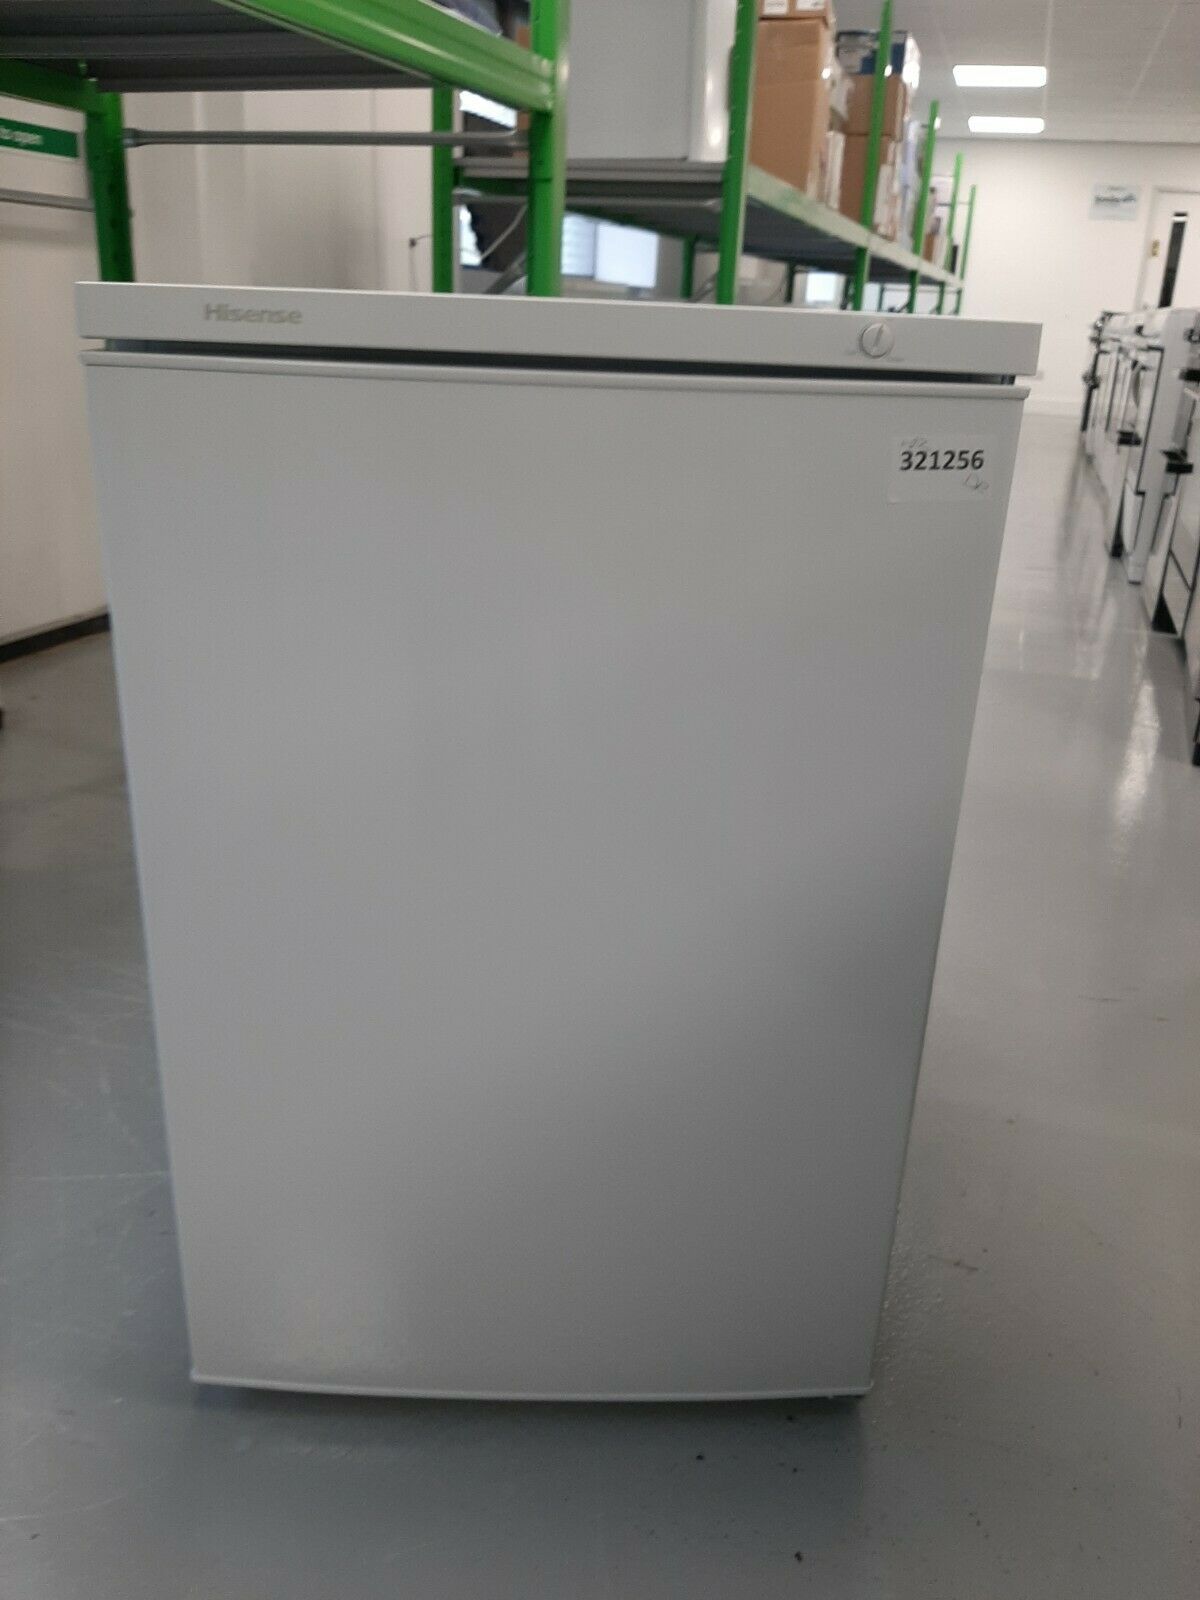 Hisense FV105D4BW21 Under Counter Freezer - White - E Rated #321256 ...